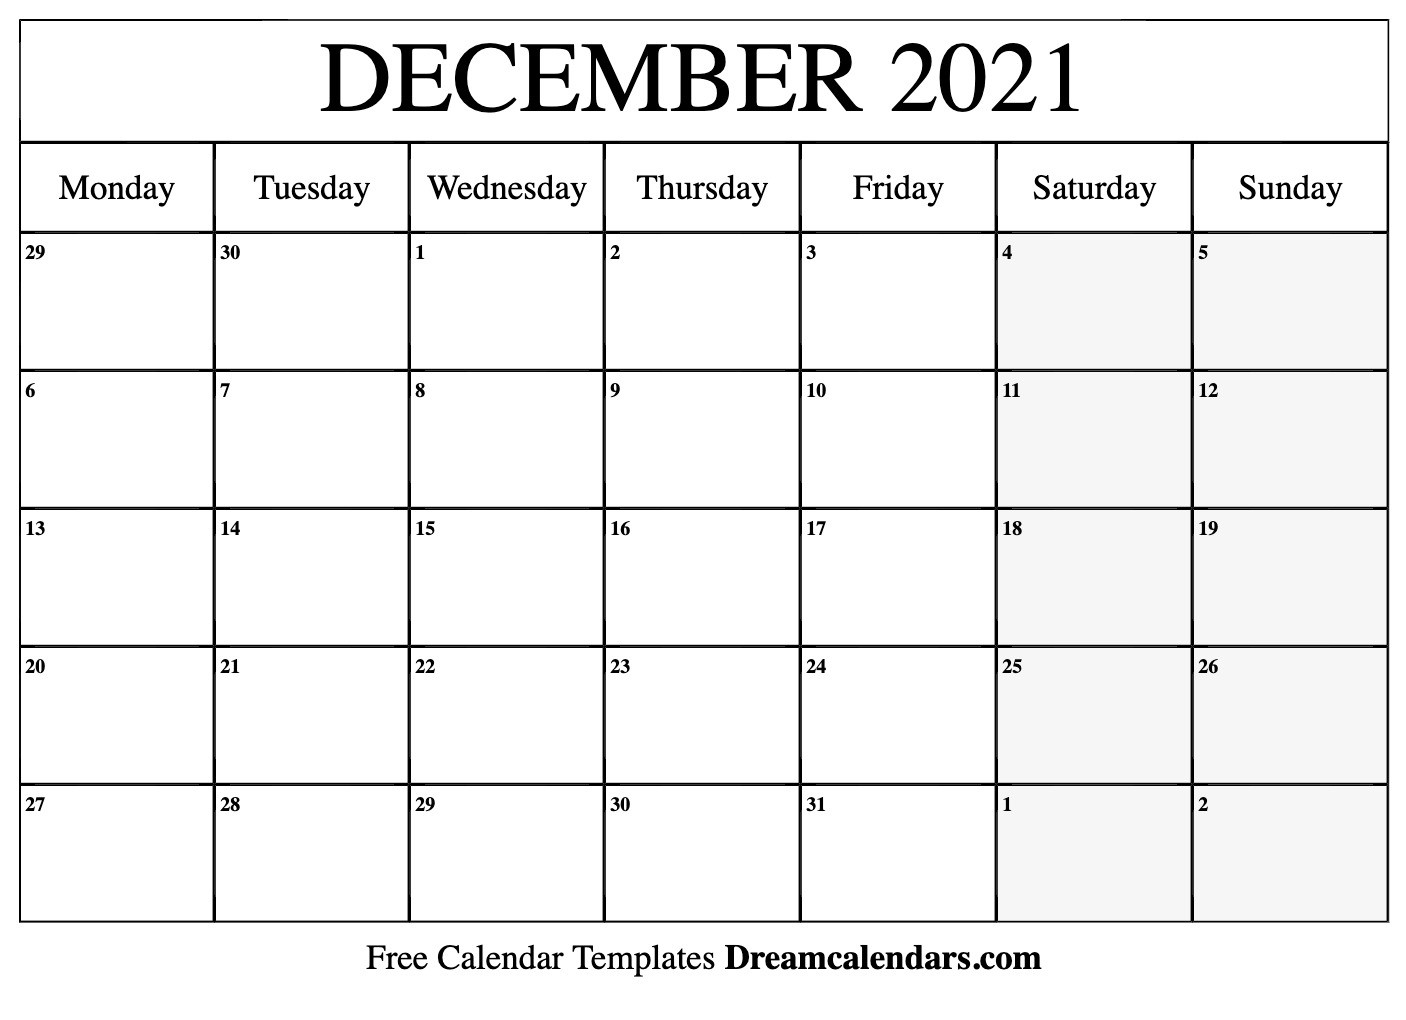 December 2021 Calendar | Free Blank Printable Templates-Free Printable Blank Monthly Calendar Year 2021